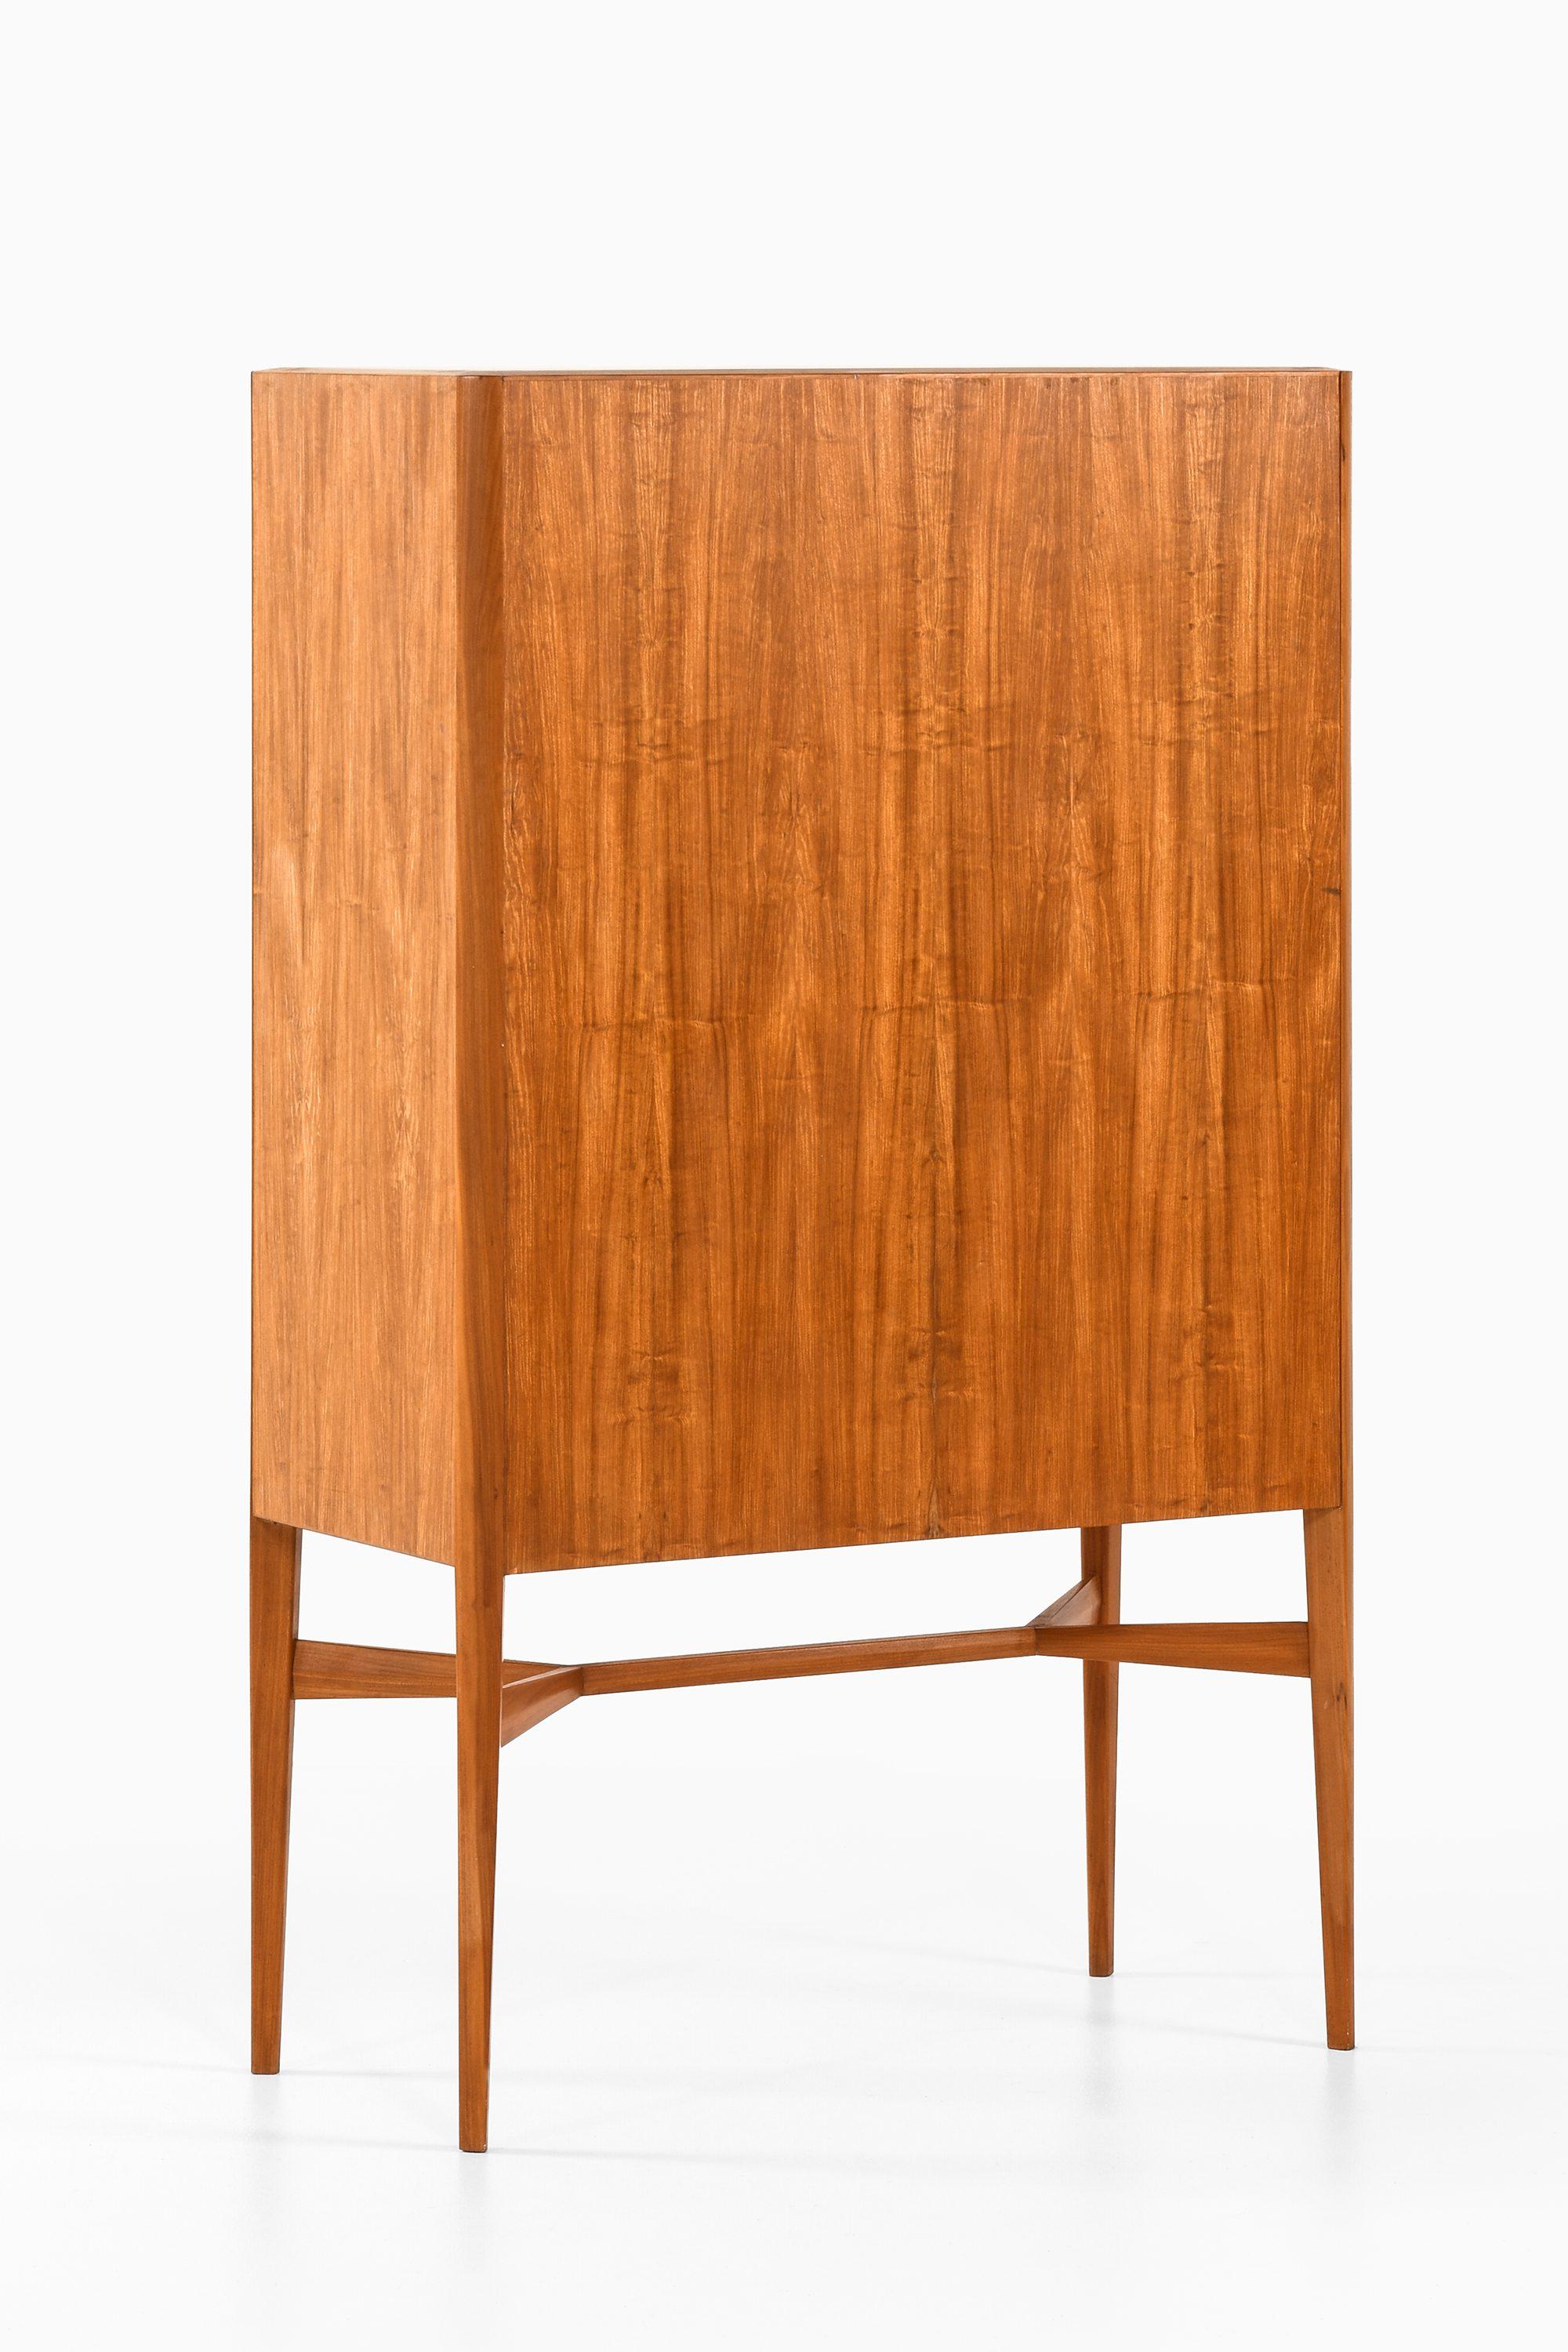 Scandinavian Modern Freestanding Cabinet in Teak by Carl-Axel Acking, 1940s For Sale